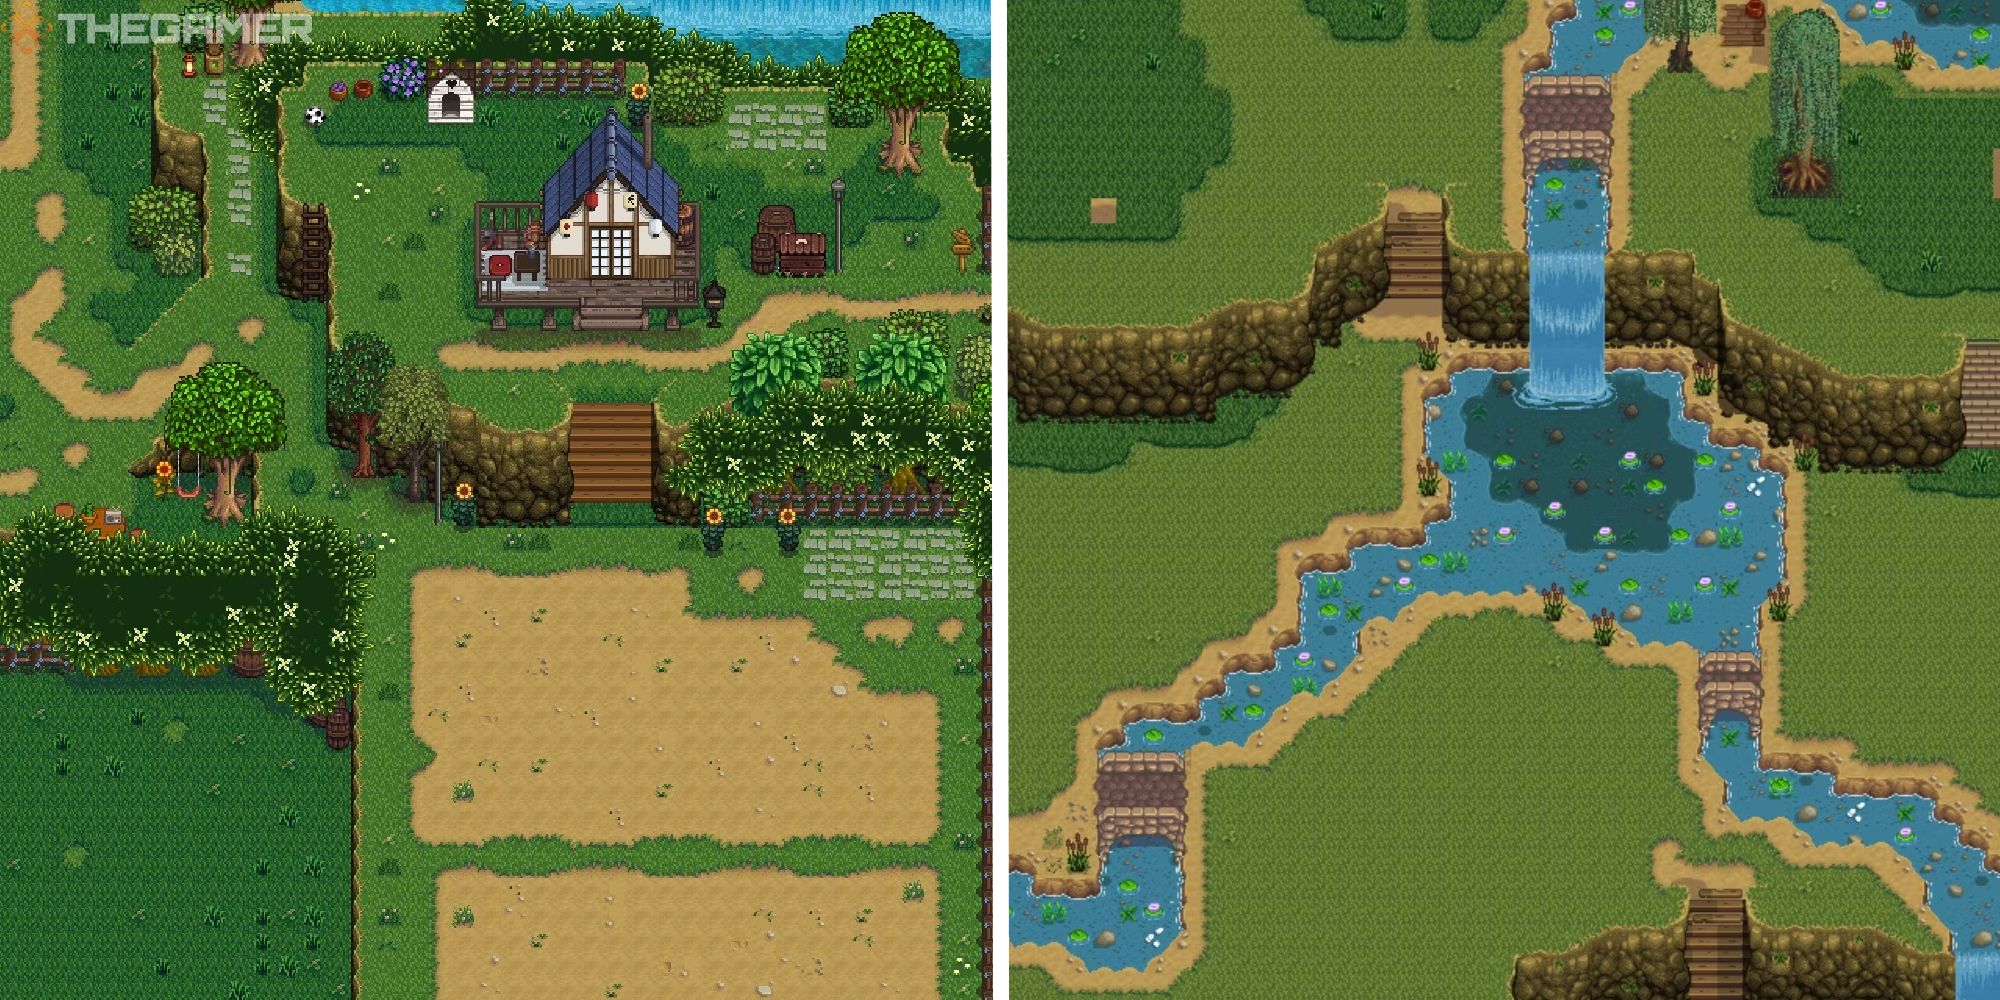 split image showing mountain top farm next to image of white water farm map